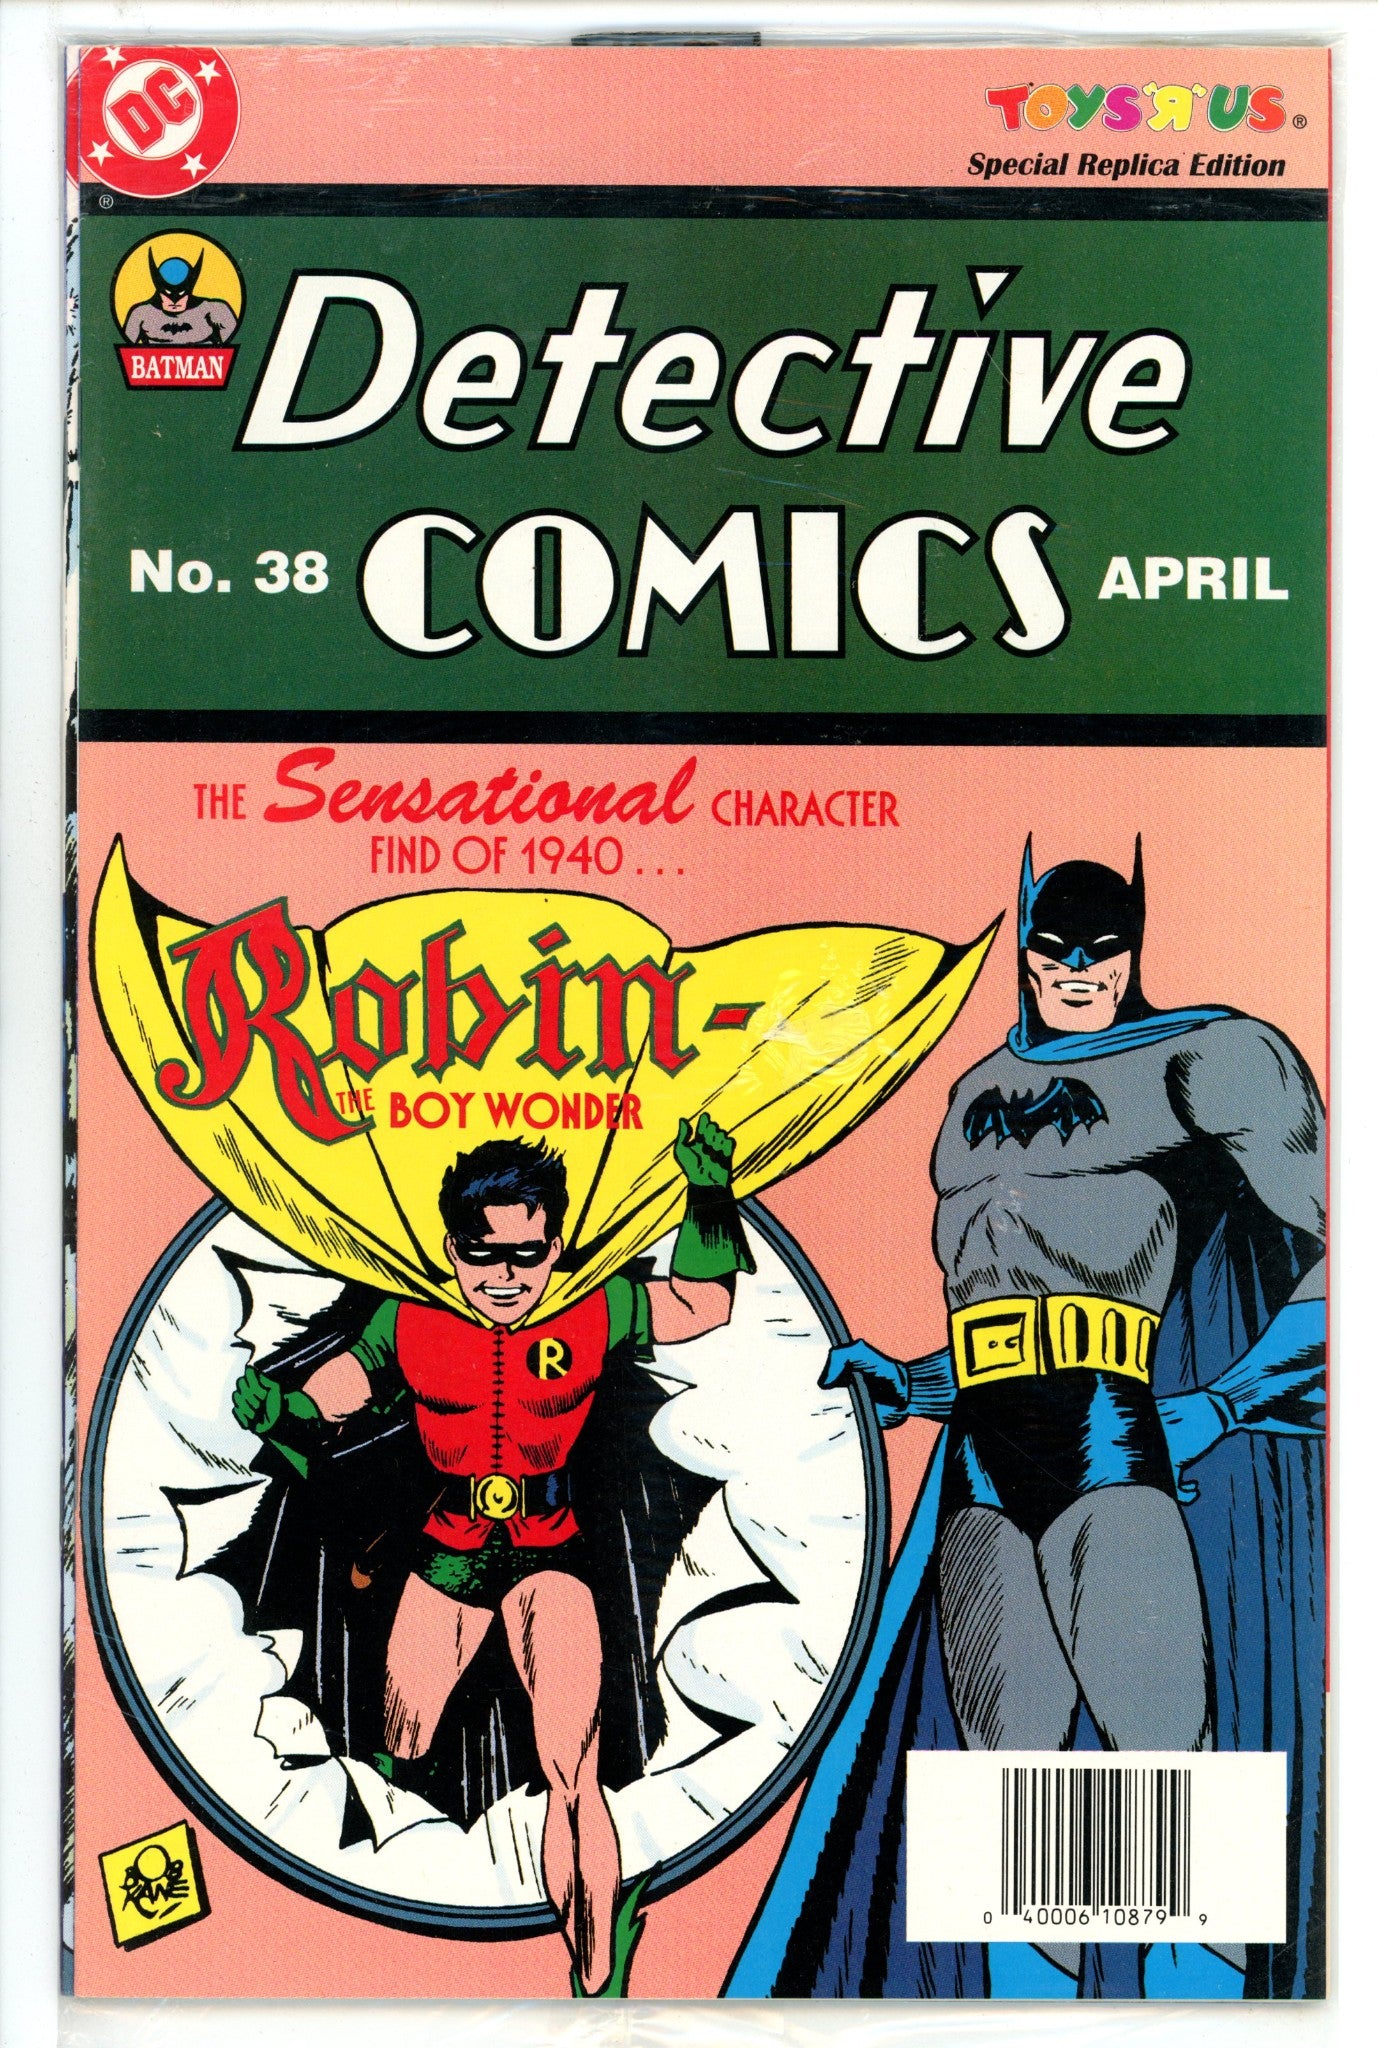 Detective Comics Special Reprint [Toys 'R' Us Special Replica Edition] Vol 1 38 New, Sealed (1997) 